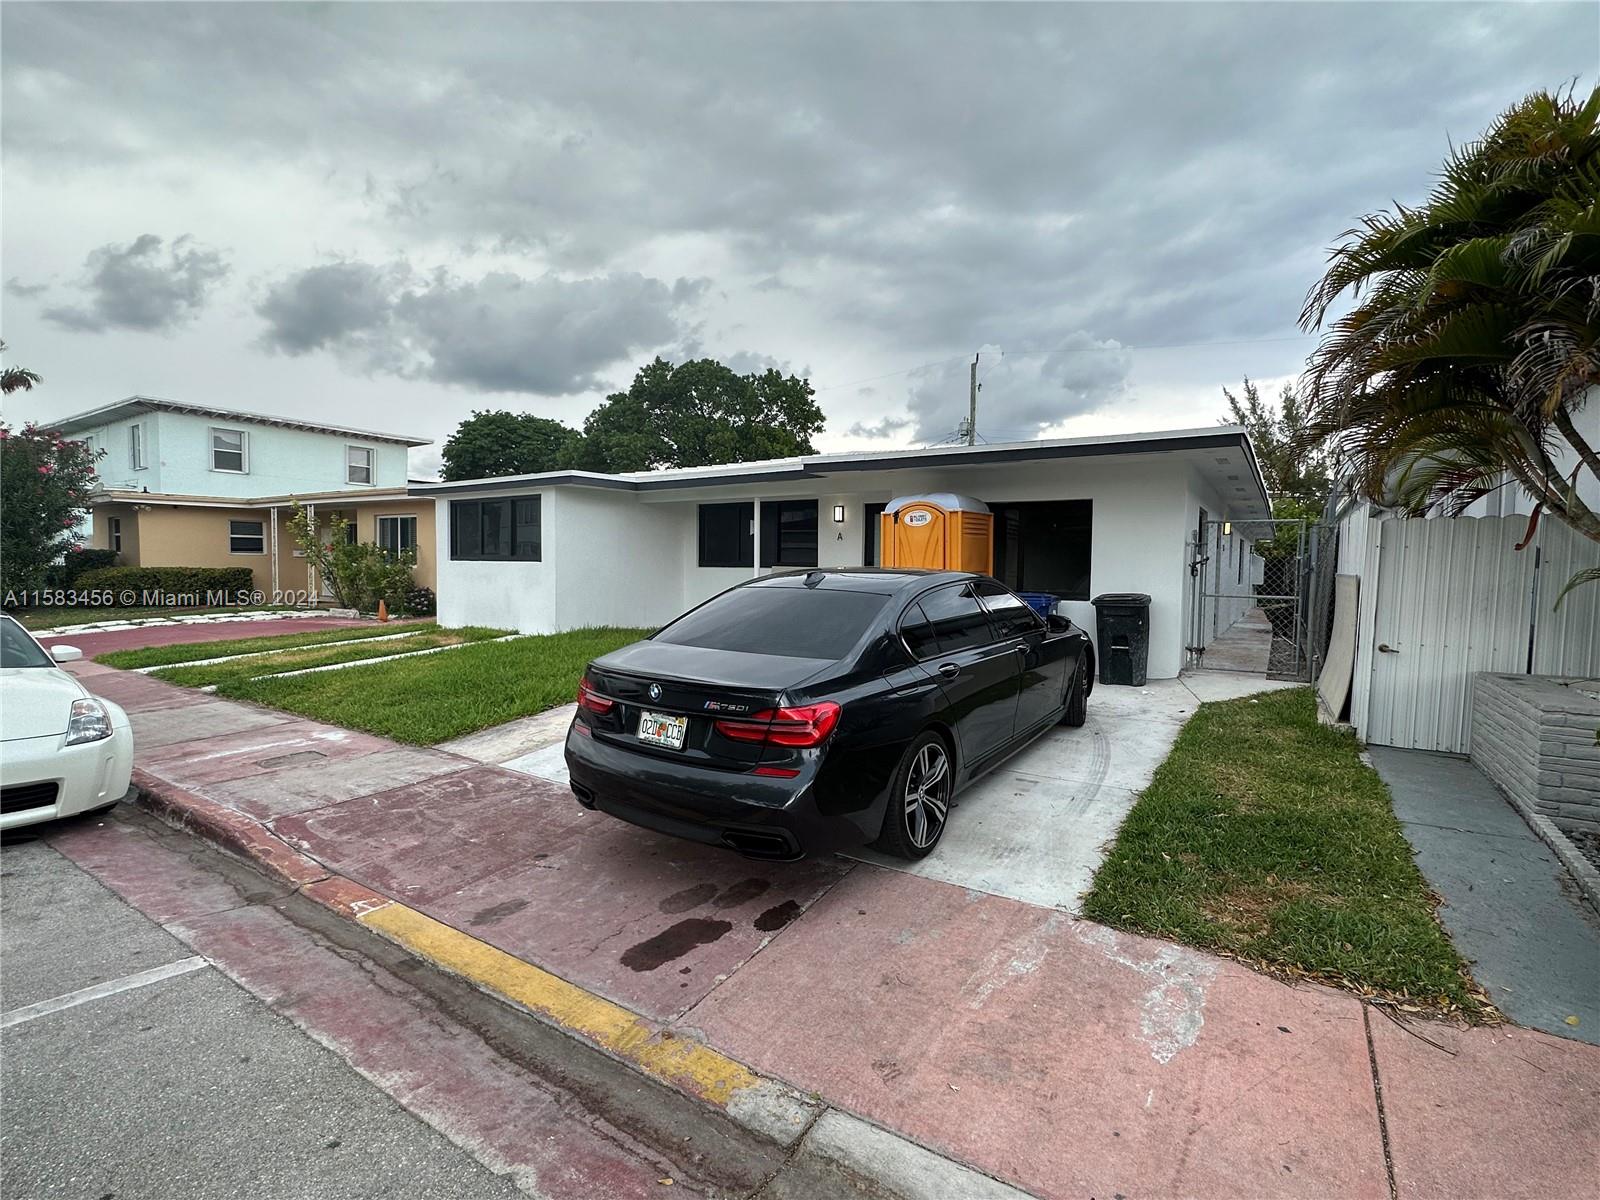 Rental Property at 911 79th Ter Ter C, Miami Beach, Miami-Dade County, Florida - Bedrooms: 2 
Bathrooms: 1  - $2,300 MO.